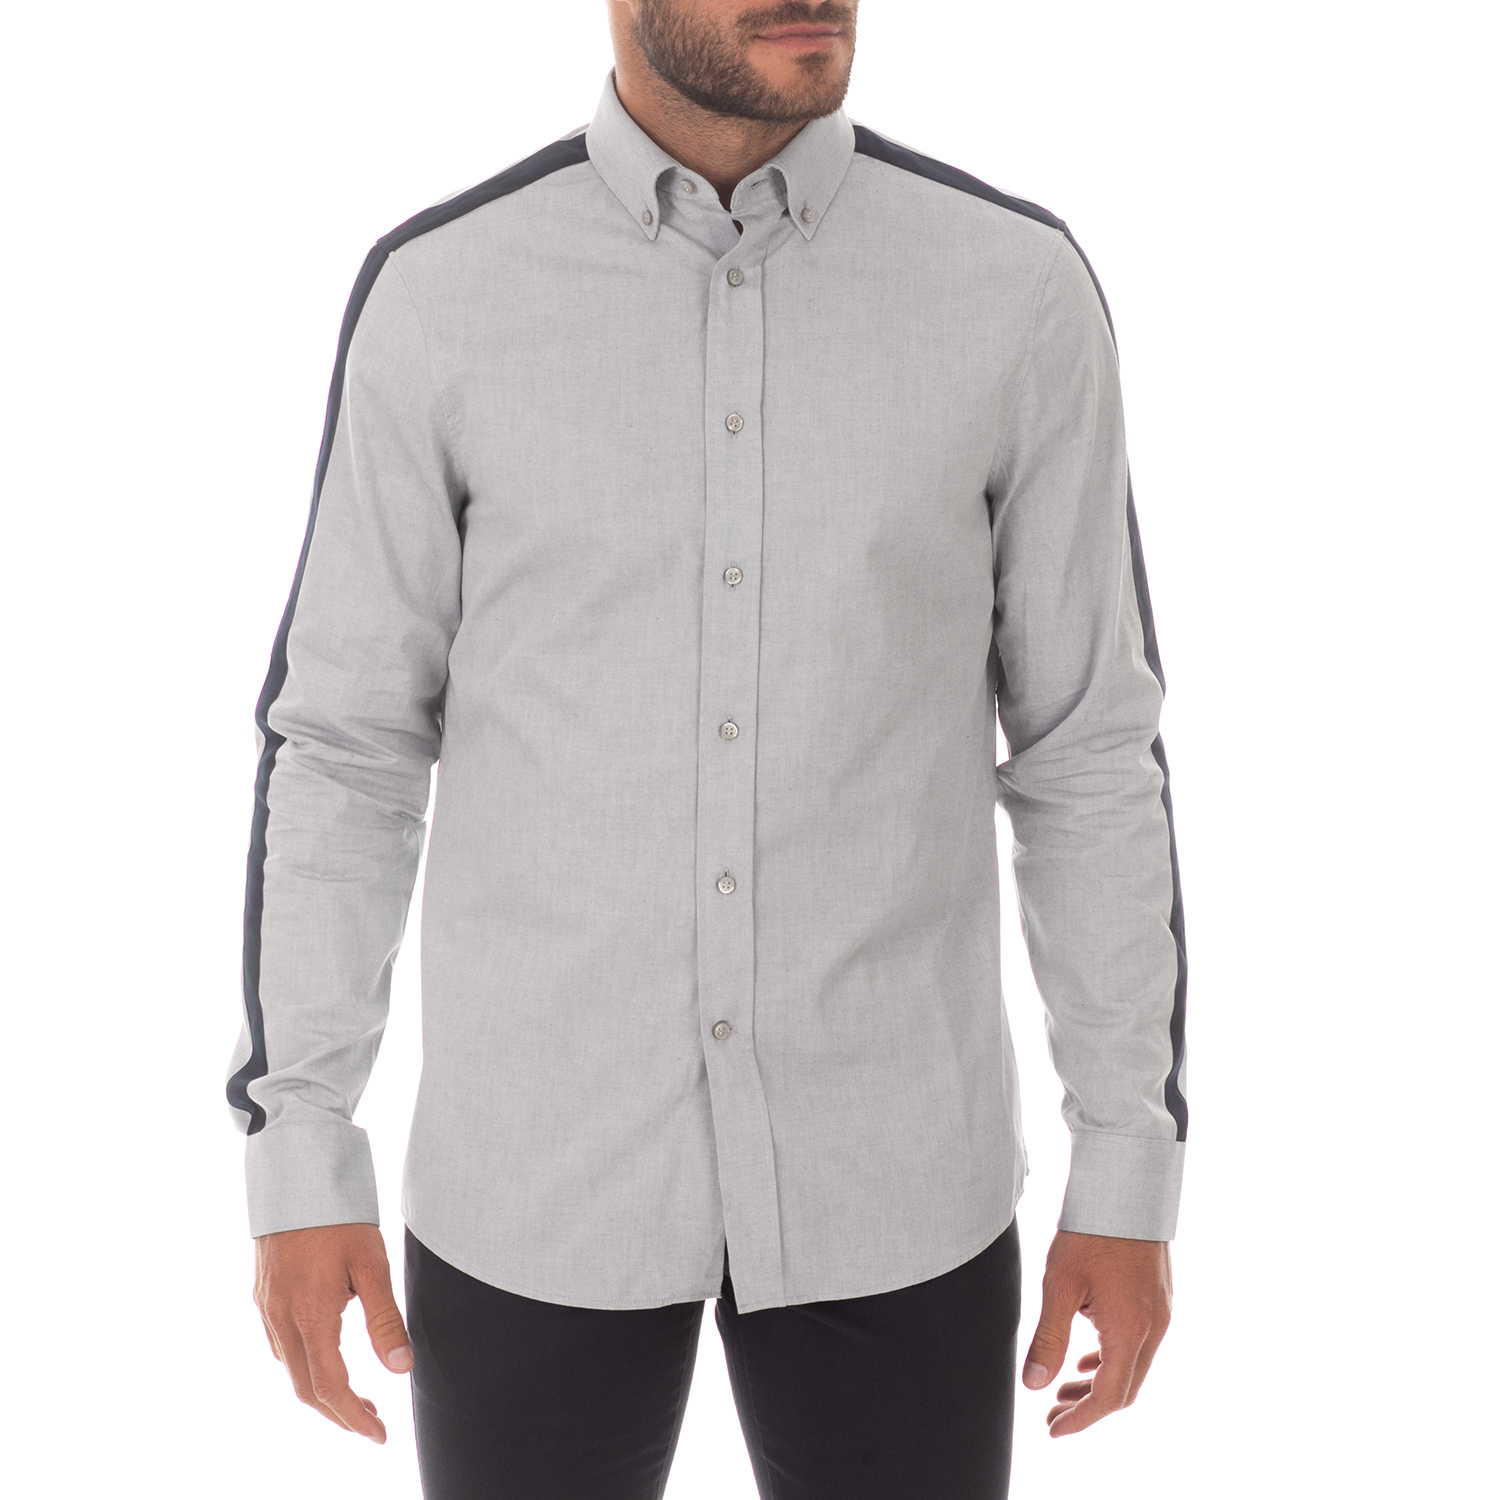 CK - Ανδρικό πουκάμισο CK REFINED OXFORD γκρι Ανδρικά/Ρούχα/Πουκάμισα/Μακρυμάνικα